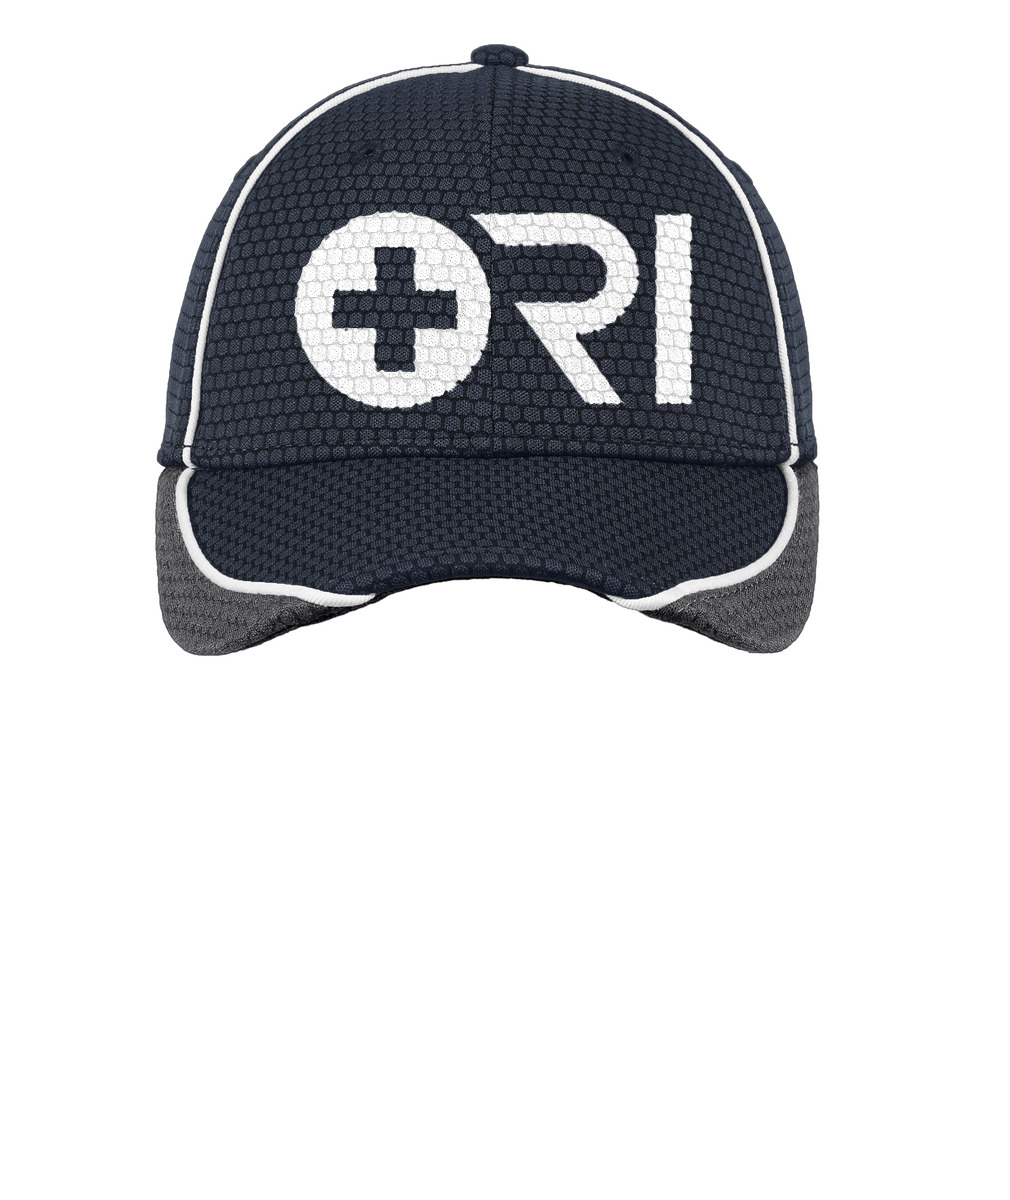 ORI Embroidered Mesh Cap or Similar